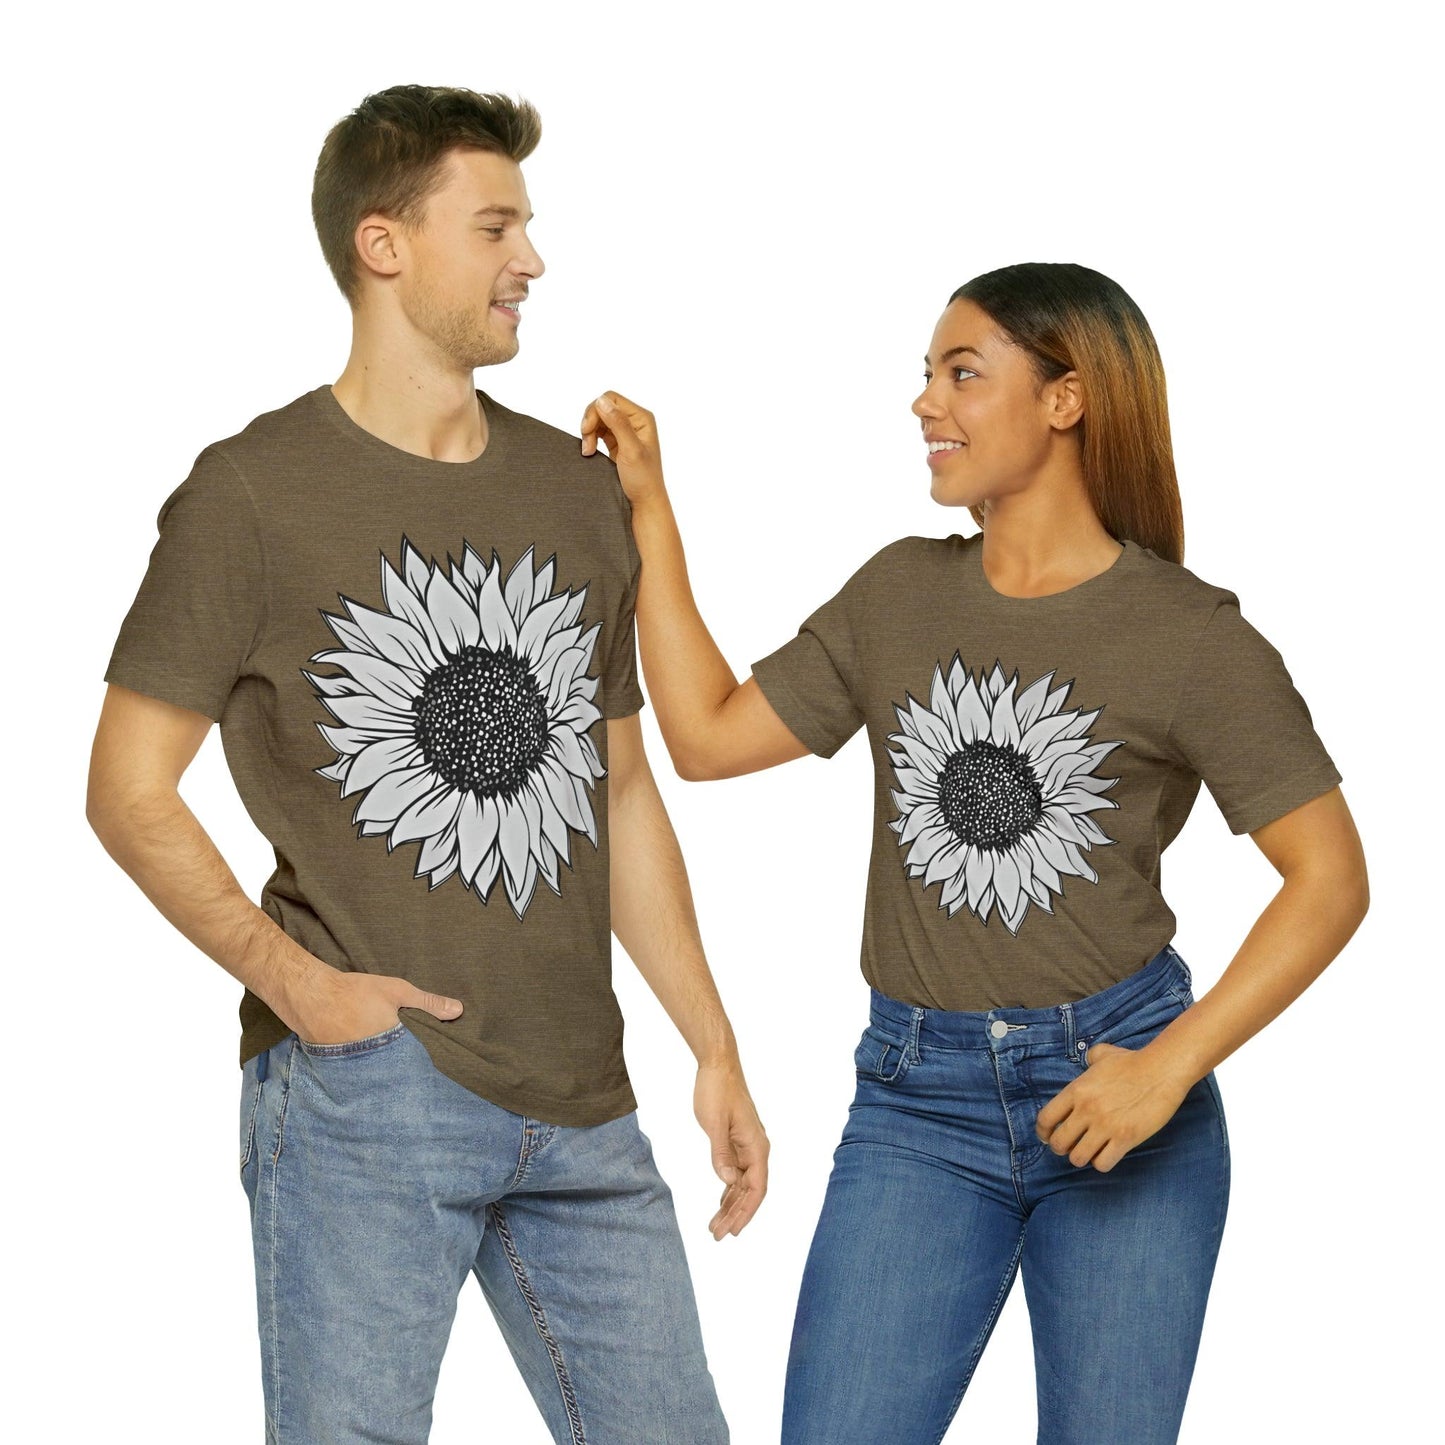 Sunflower Shirt, Floral Tee Shirt, Flower Shirt, Garden Shirt, Womens Fall Summer Shirt Sunshine Tee, Gift for Gardener, Nature love - Giftsmojo